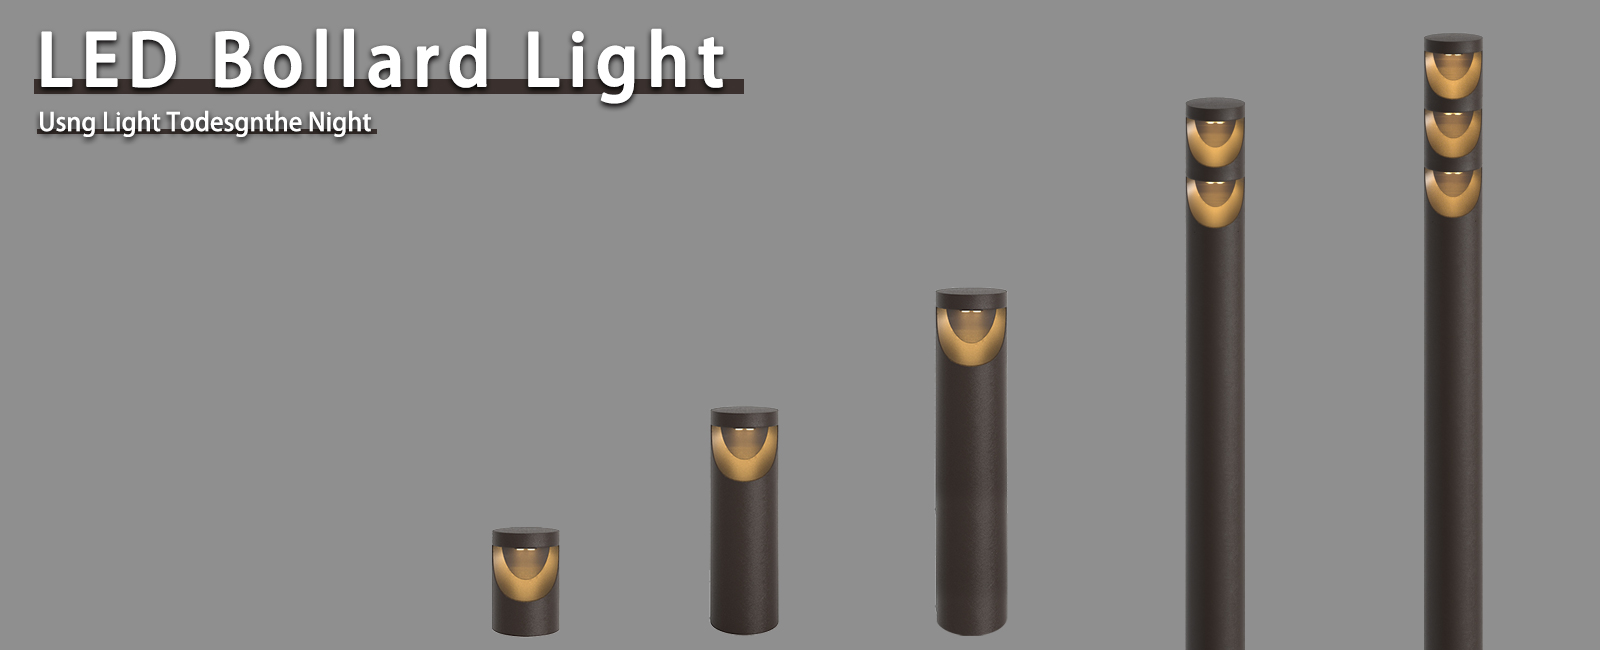 LED Bollard Light